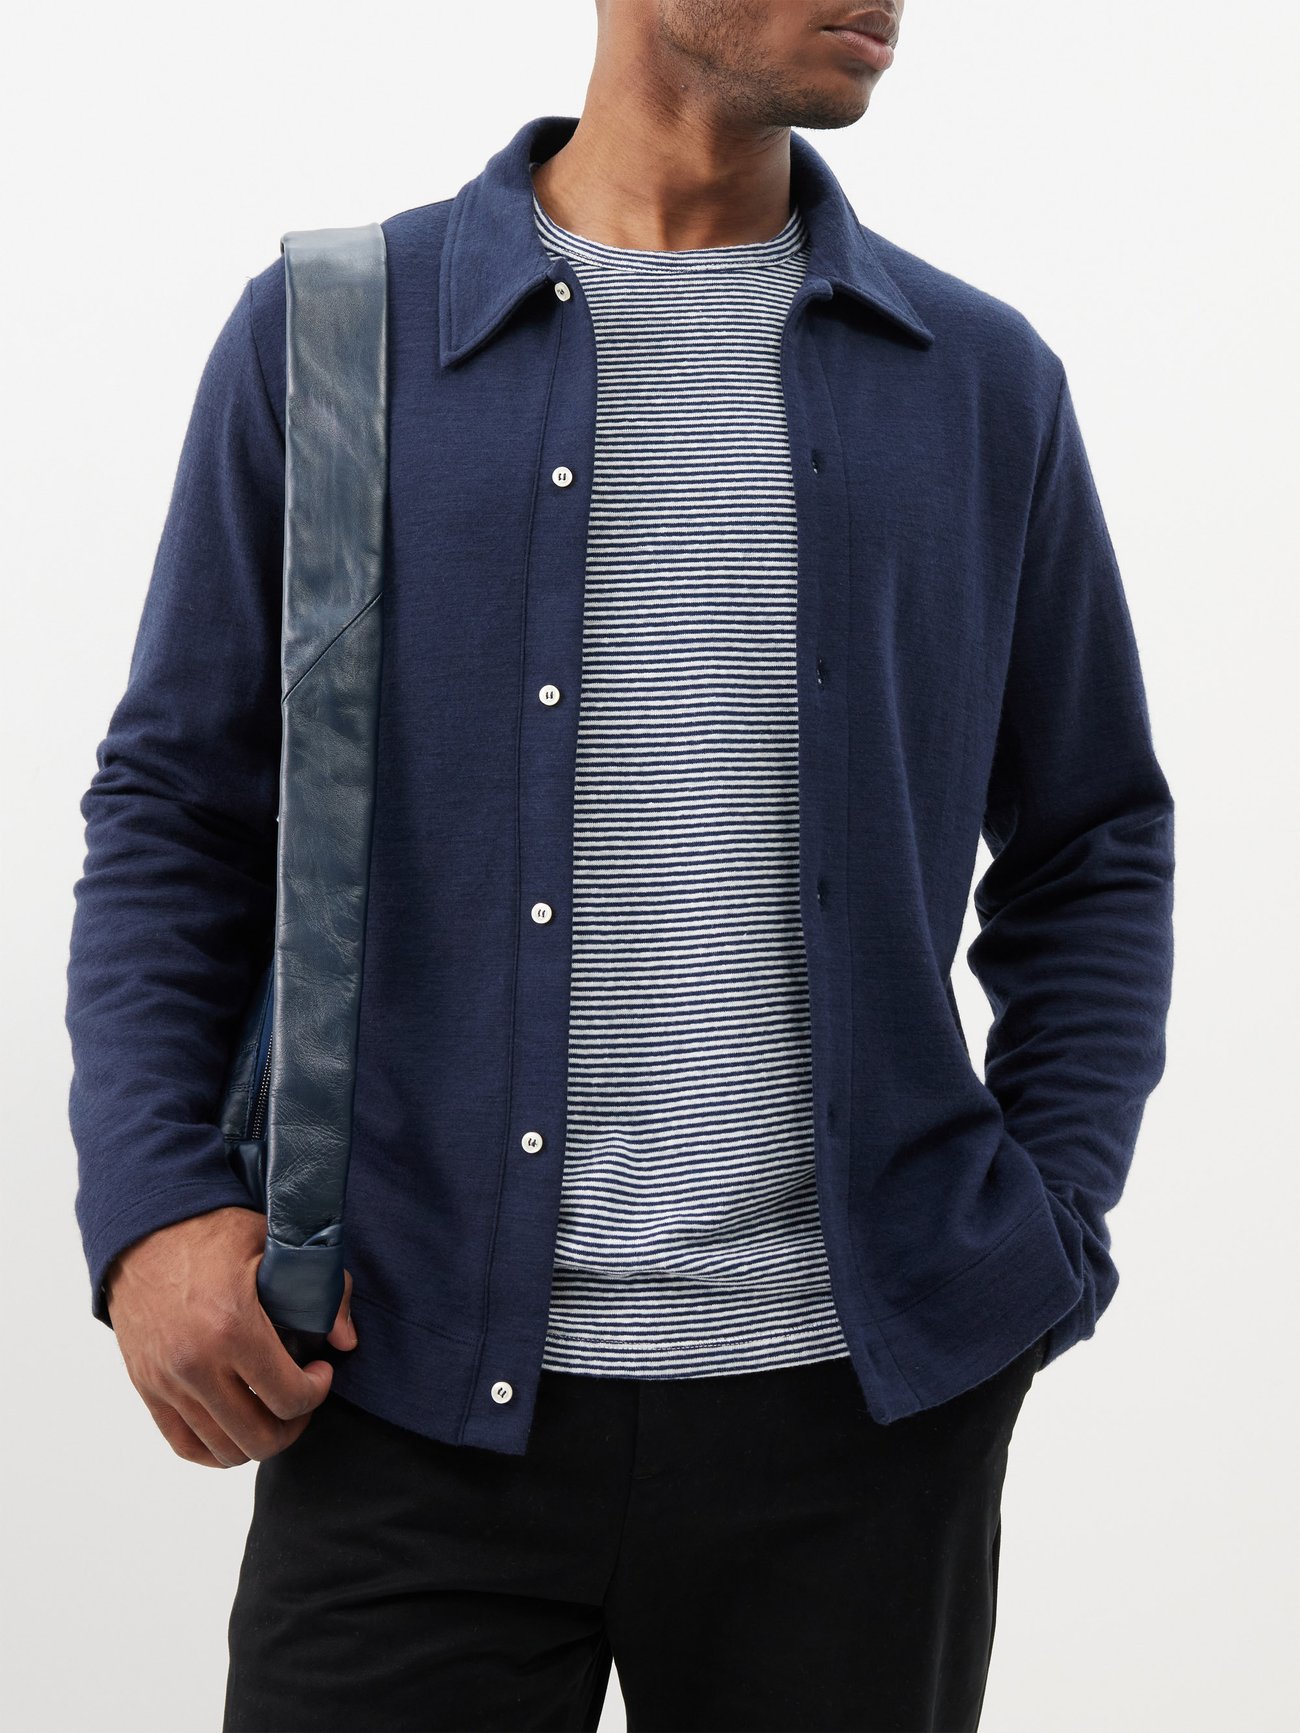 Brent Générale shirt Officine wool-blend | US polo Navy | MATCHES